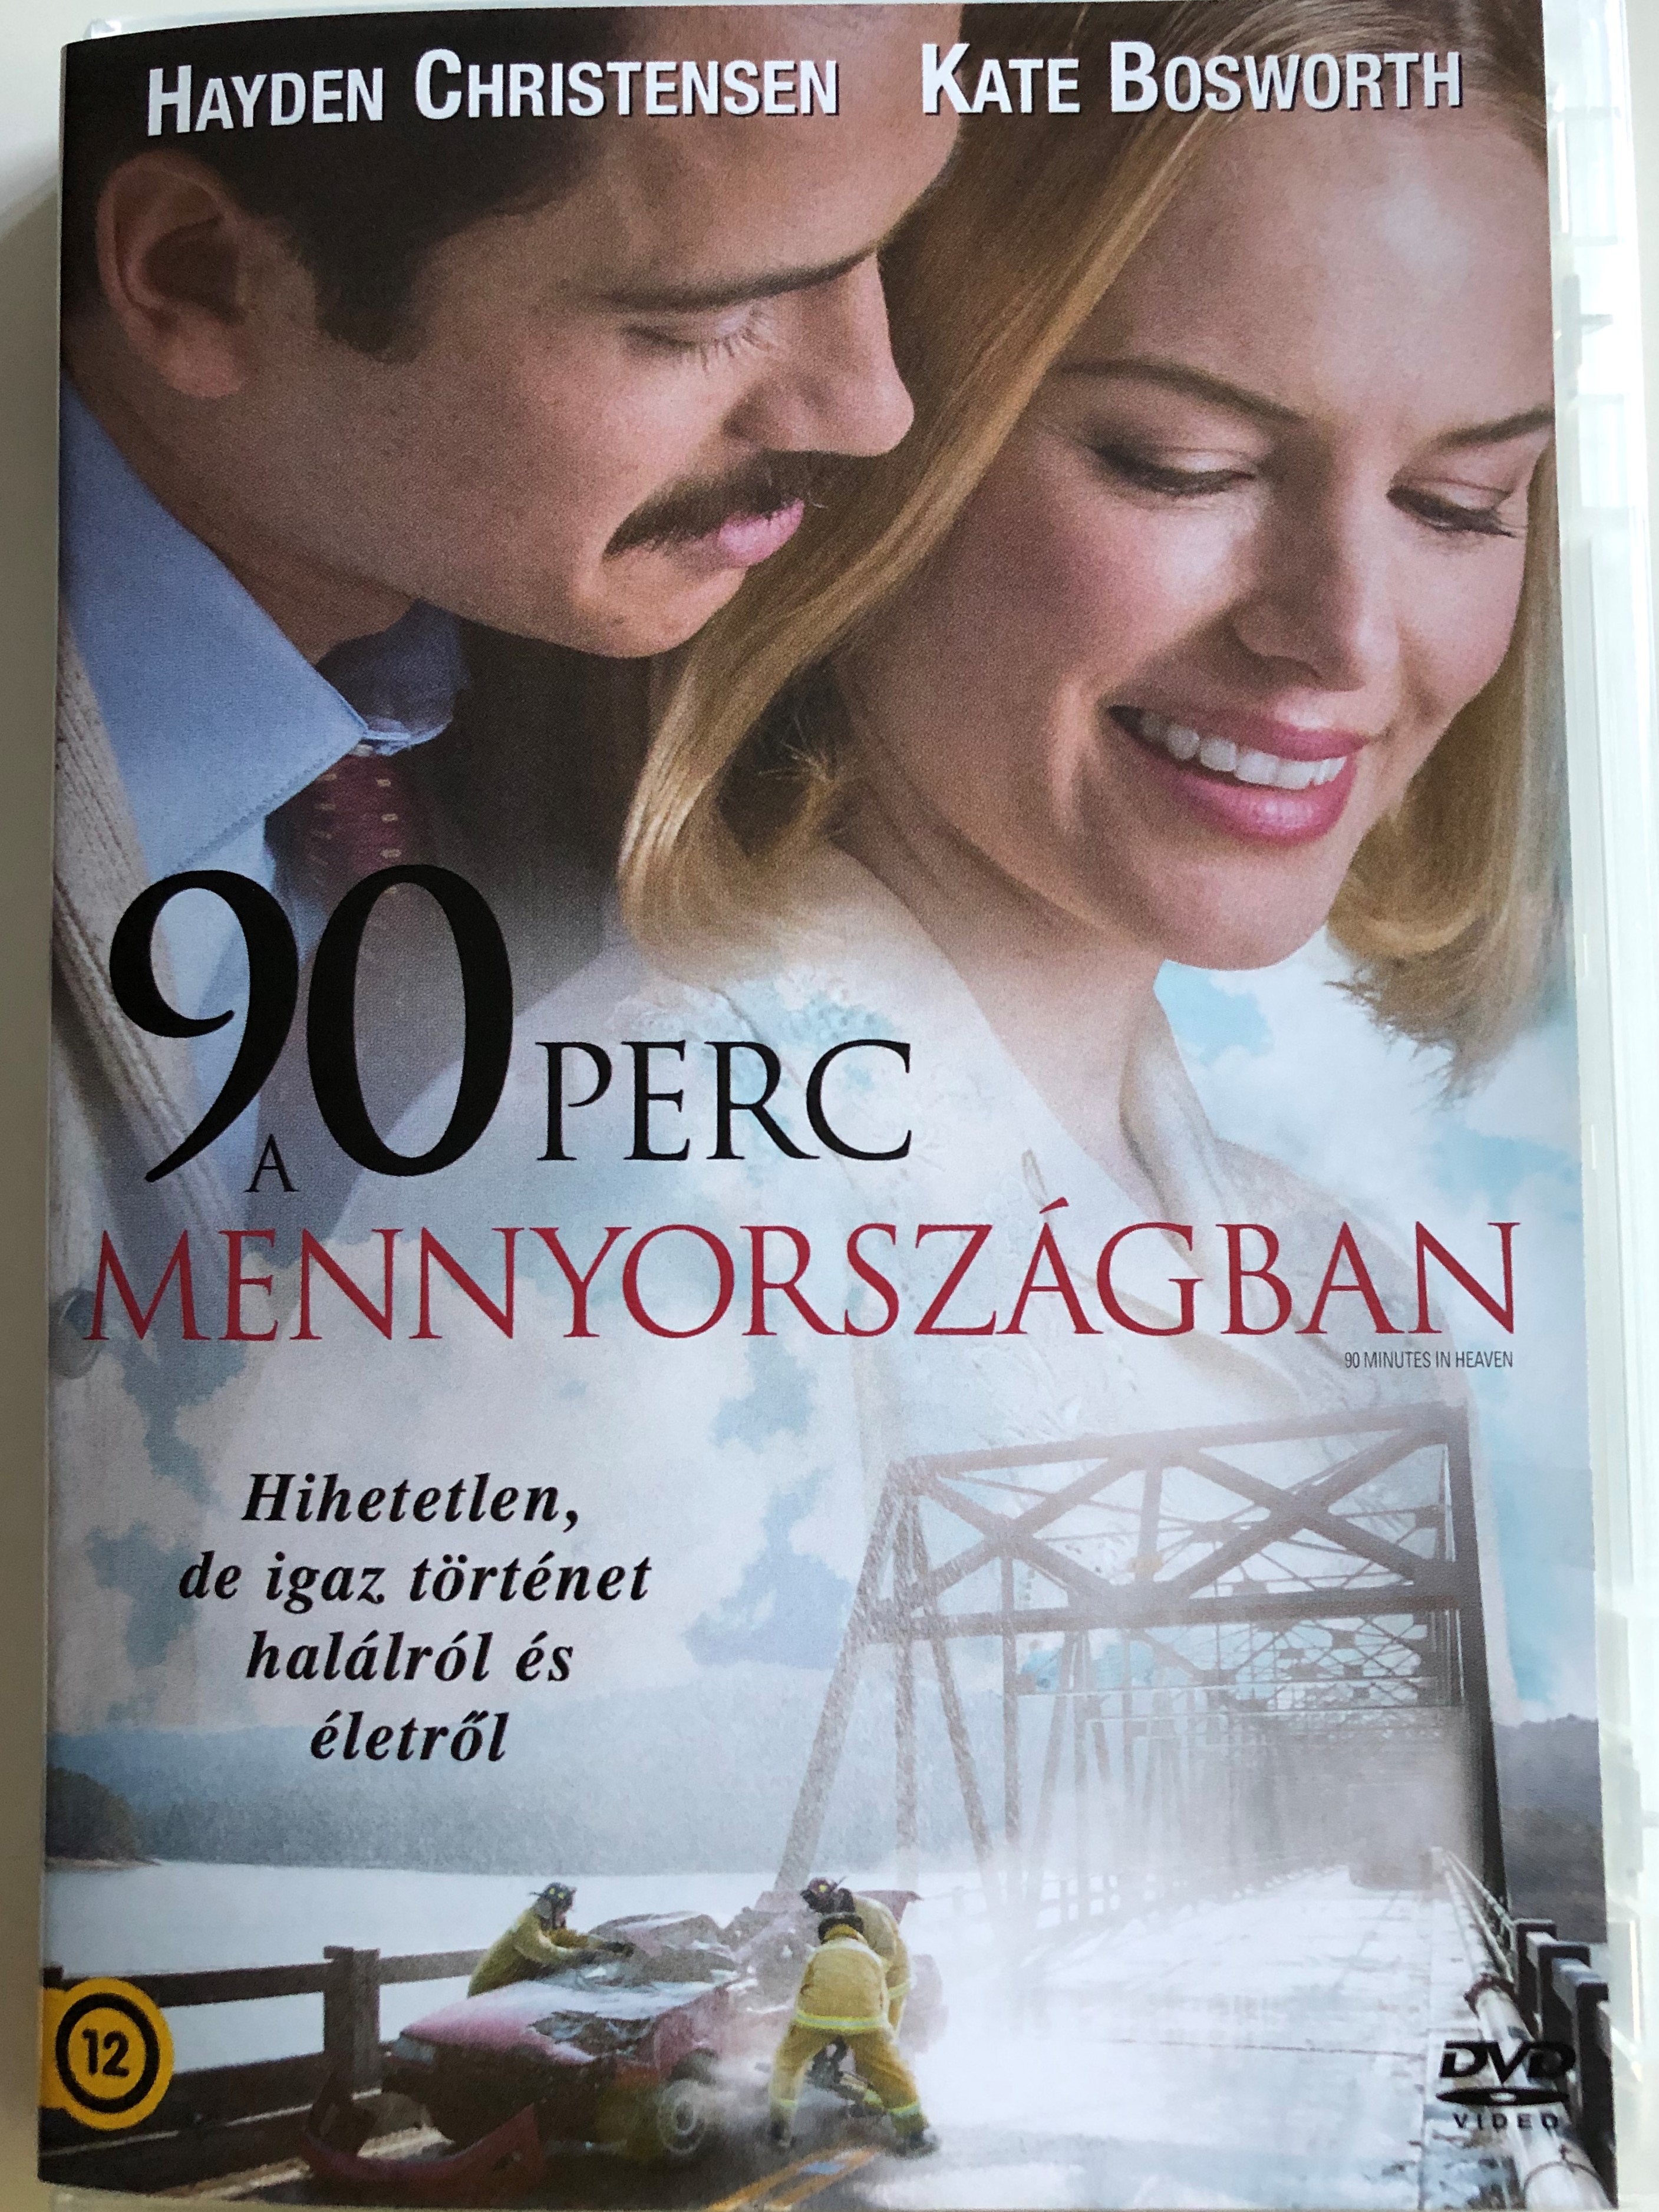 90-minutes-in-heaven-dvd-2015-90-perc-a-mennyorsz-gban-directed-by-michael-polish-starring-hayden-christensen-kate-bosworth-1-.jpg